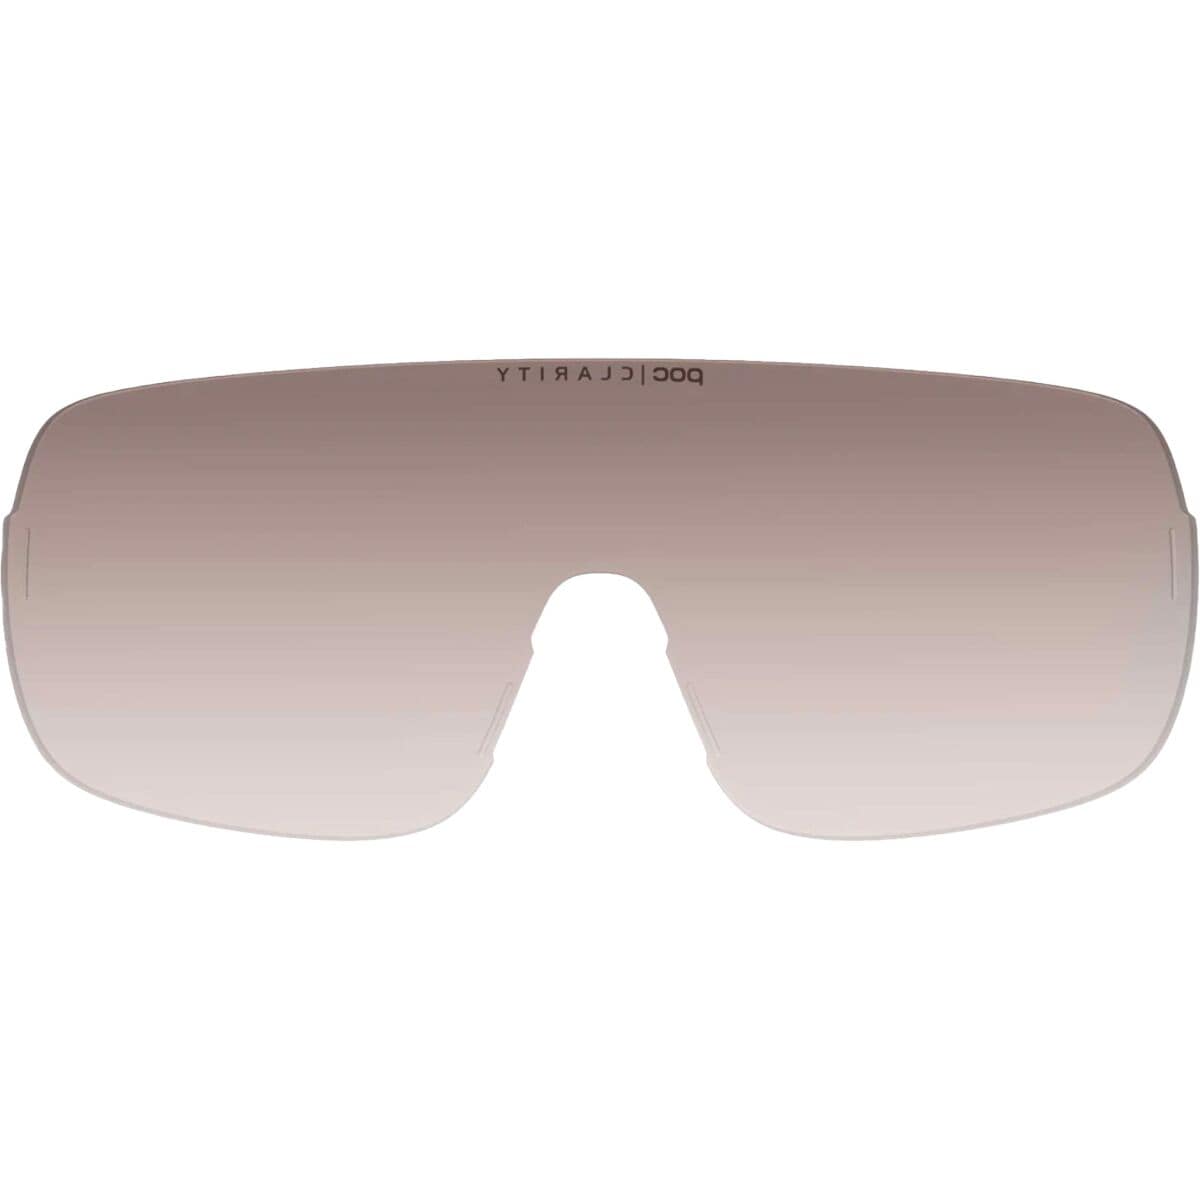  POC Aim Sunglasses Spare Lens - Accessories